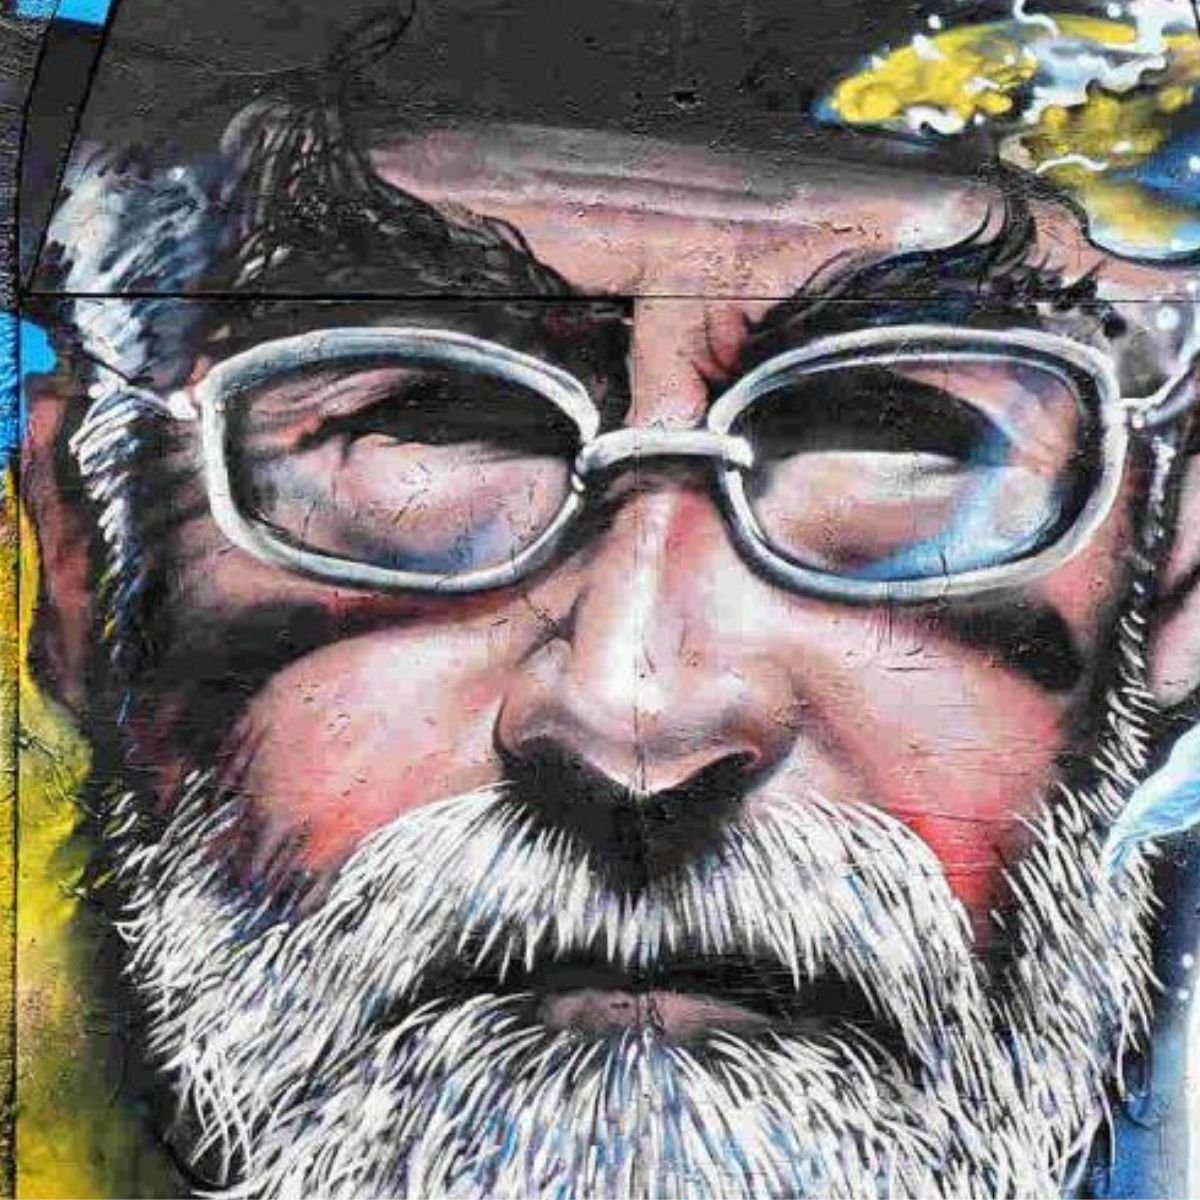 Teri Pračet, “Terry Pratchett Tribute Graffiti” flickr photo by branestawm2002